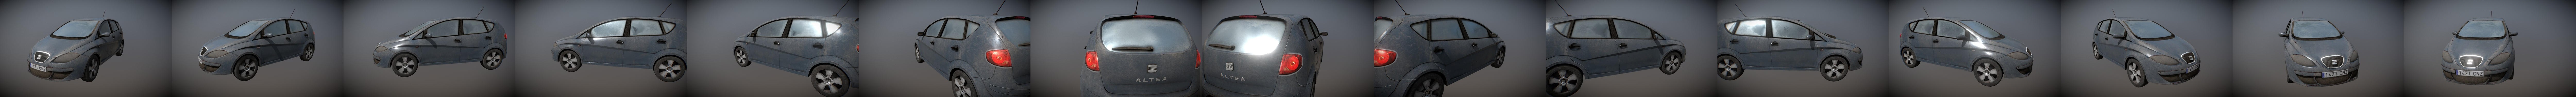 Seat Altea Car for Videogame - 3D model by serdialcgi (@serdialcgi)  [e5381e8]